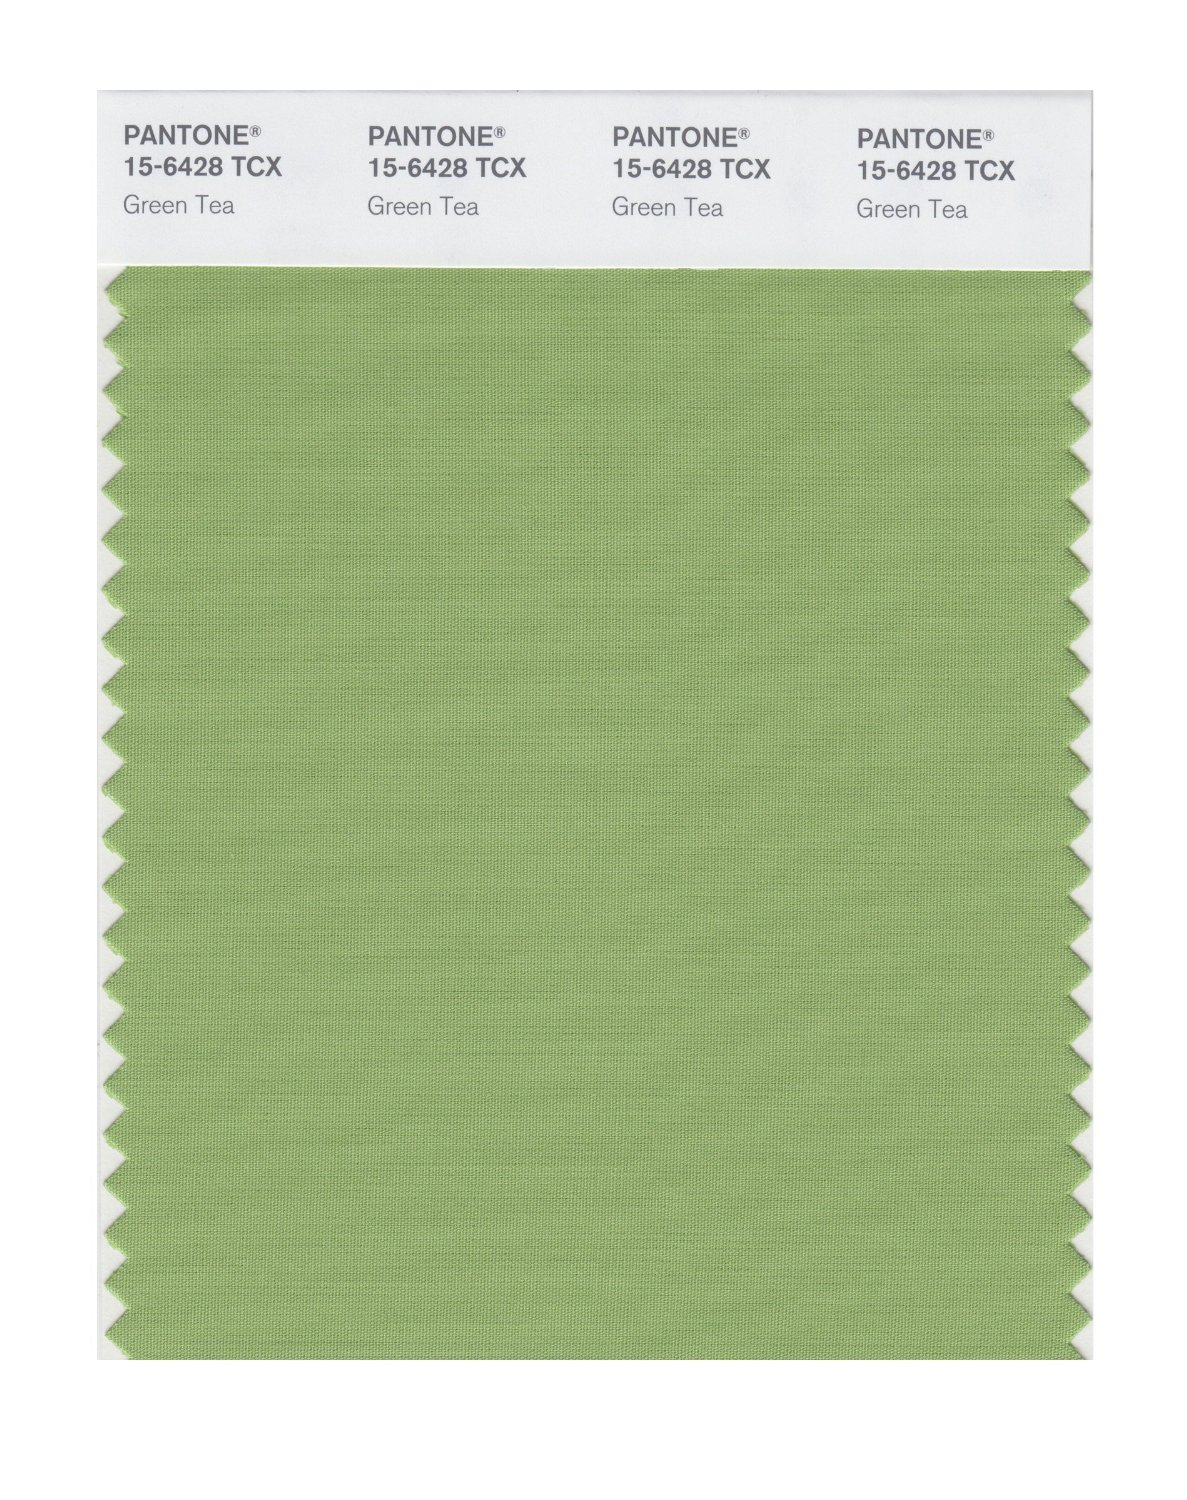 Pantone Cotton Swatch 15-6428 Green Tea